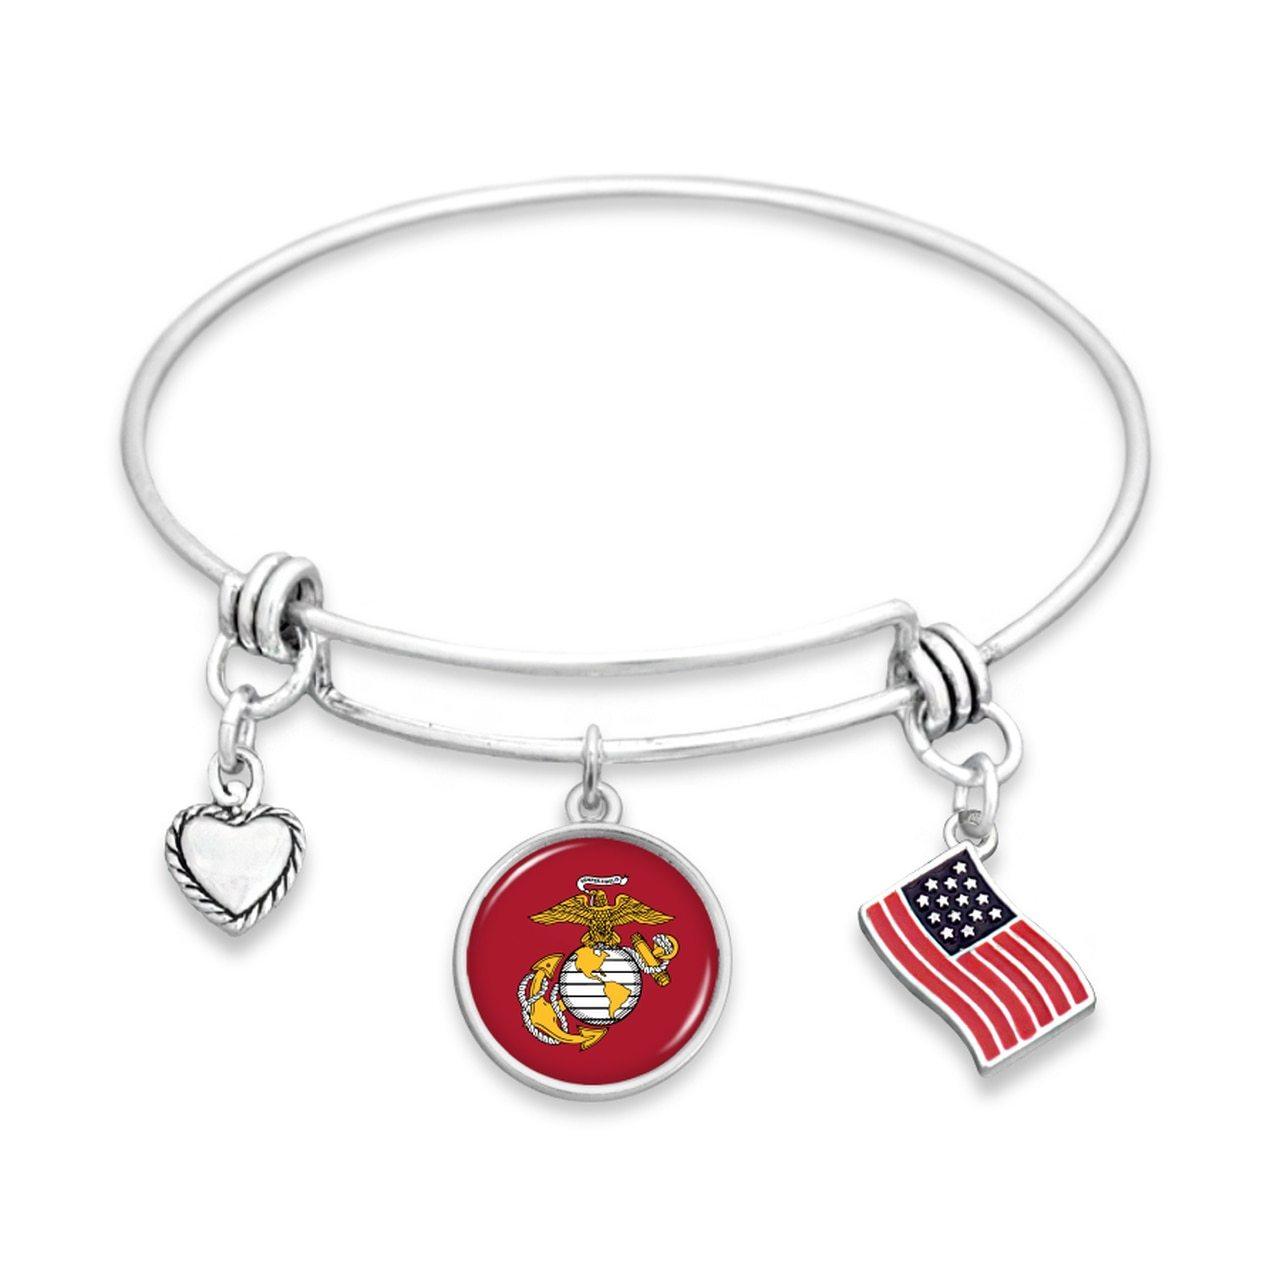 U.S. Marines 3 Charm Bracelet with American Flag - Military Republic